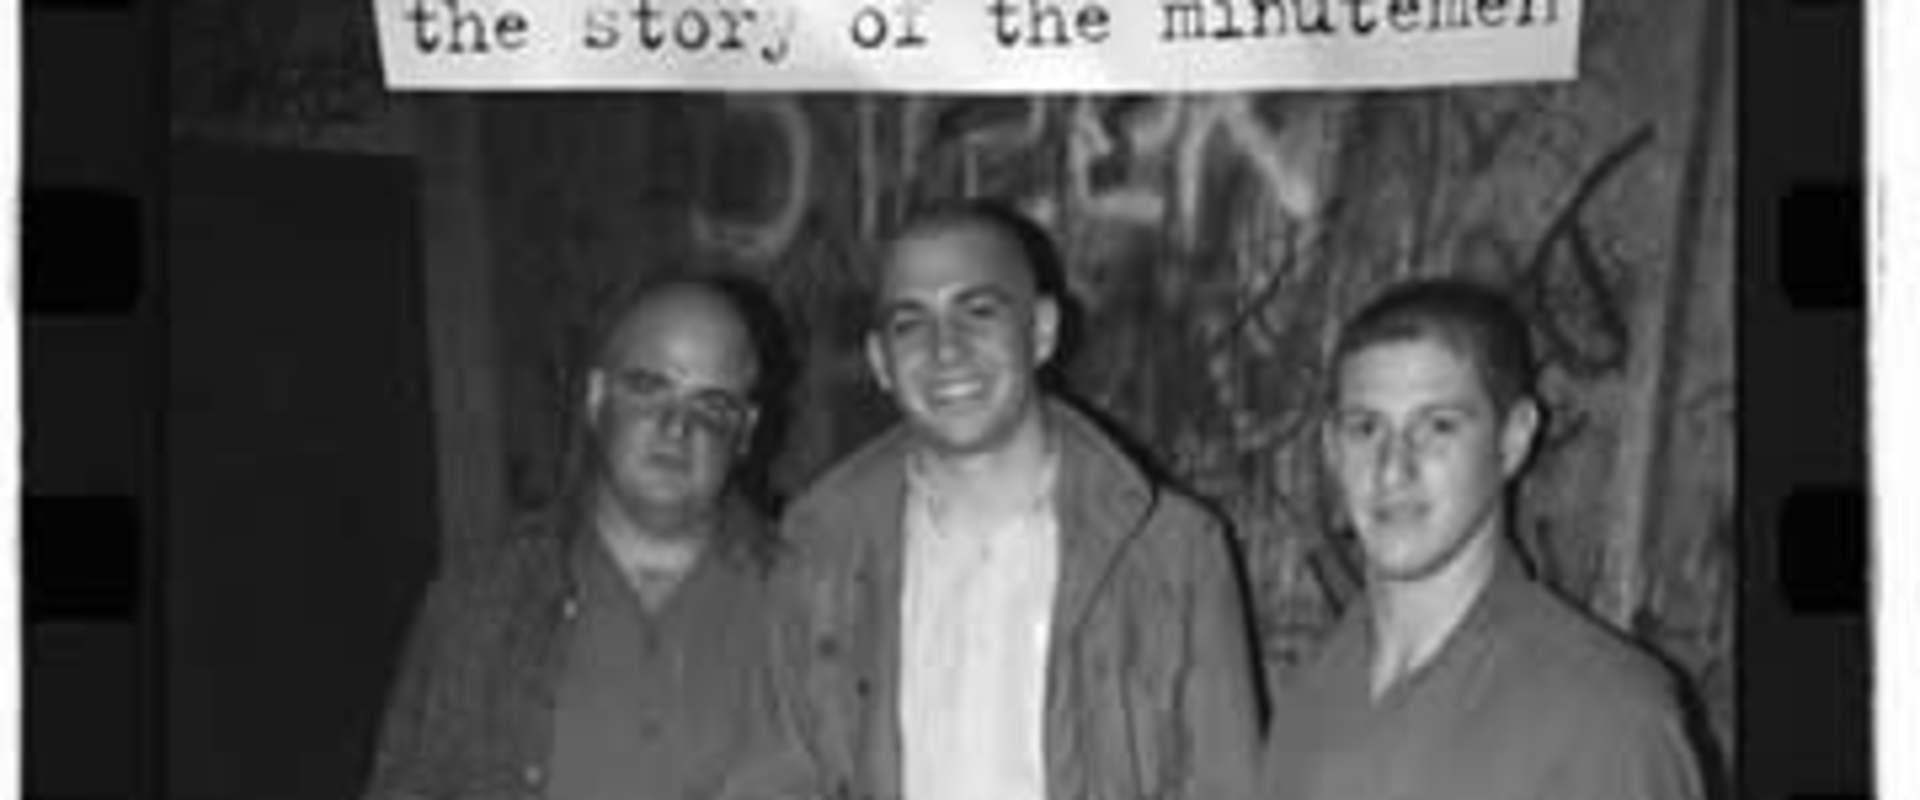 We Jam Econo: The Story of the Minutemen background 2